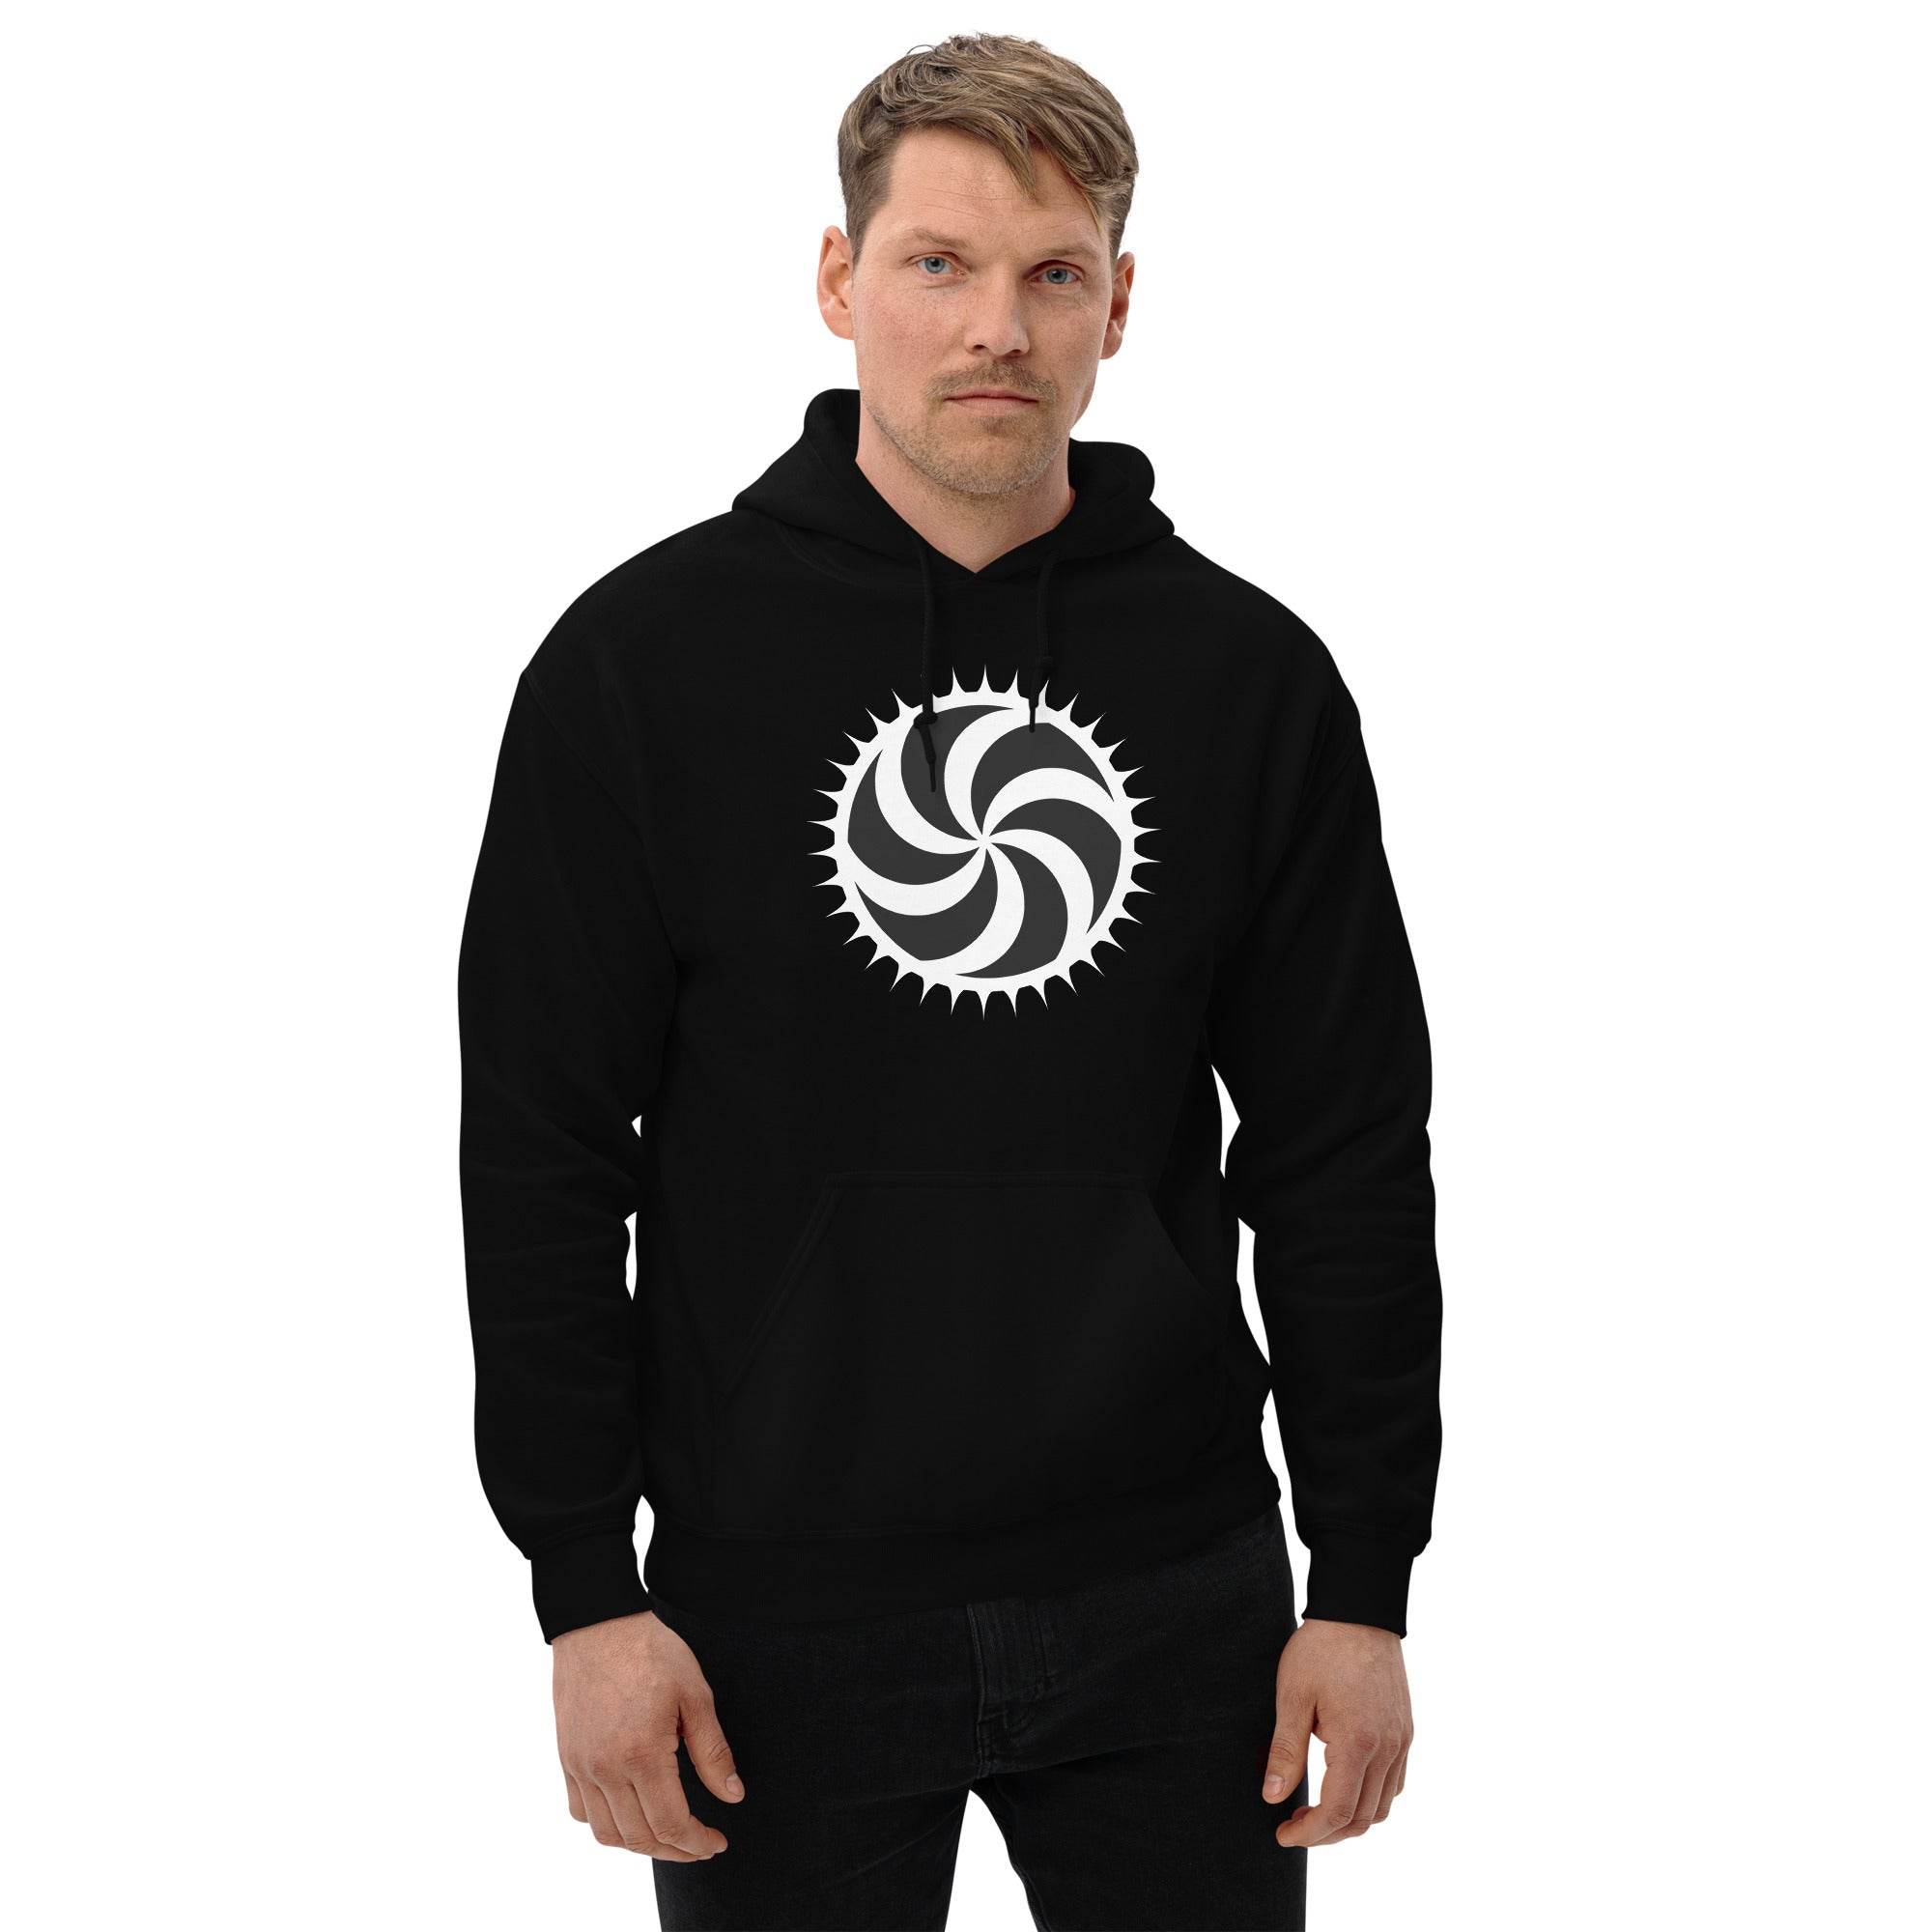 White Deadly Swirl Spike Alchemy Symbol Hoodie Sweatshirt